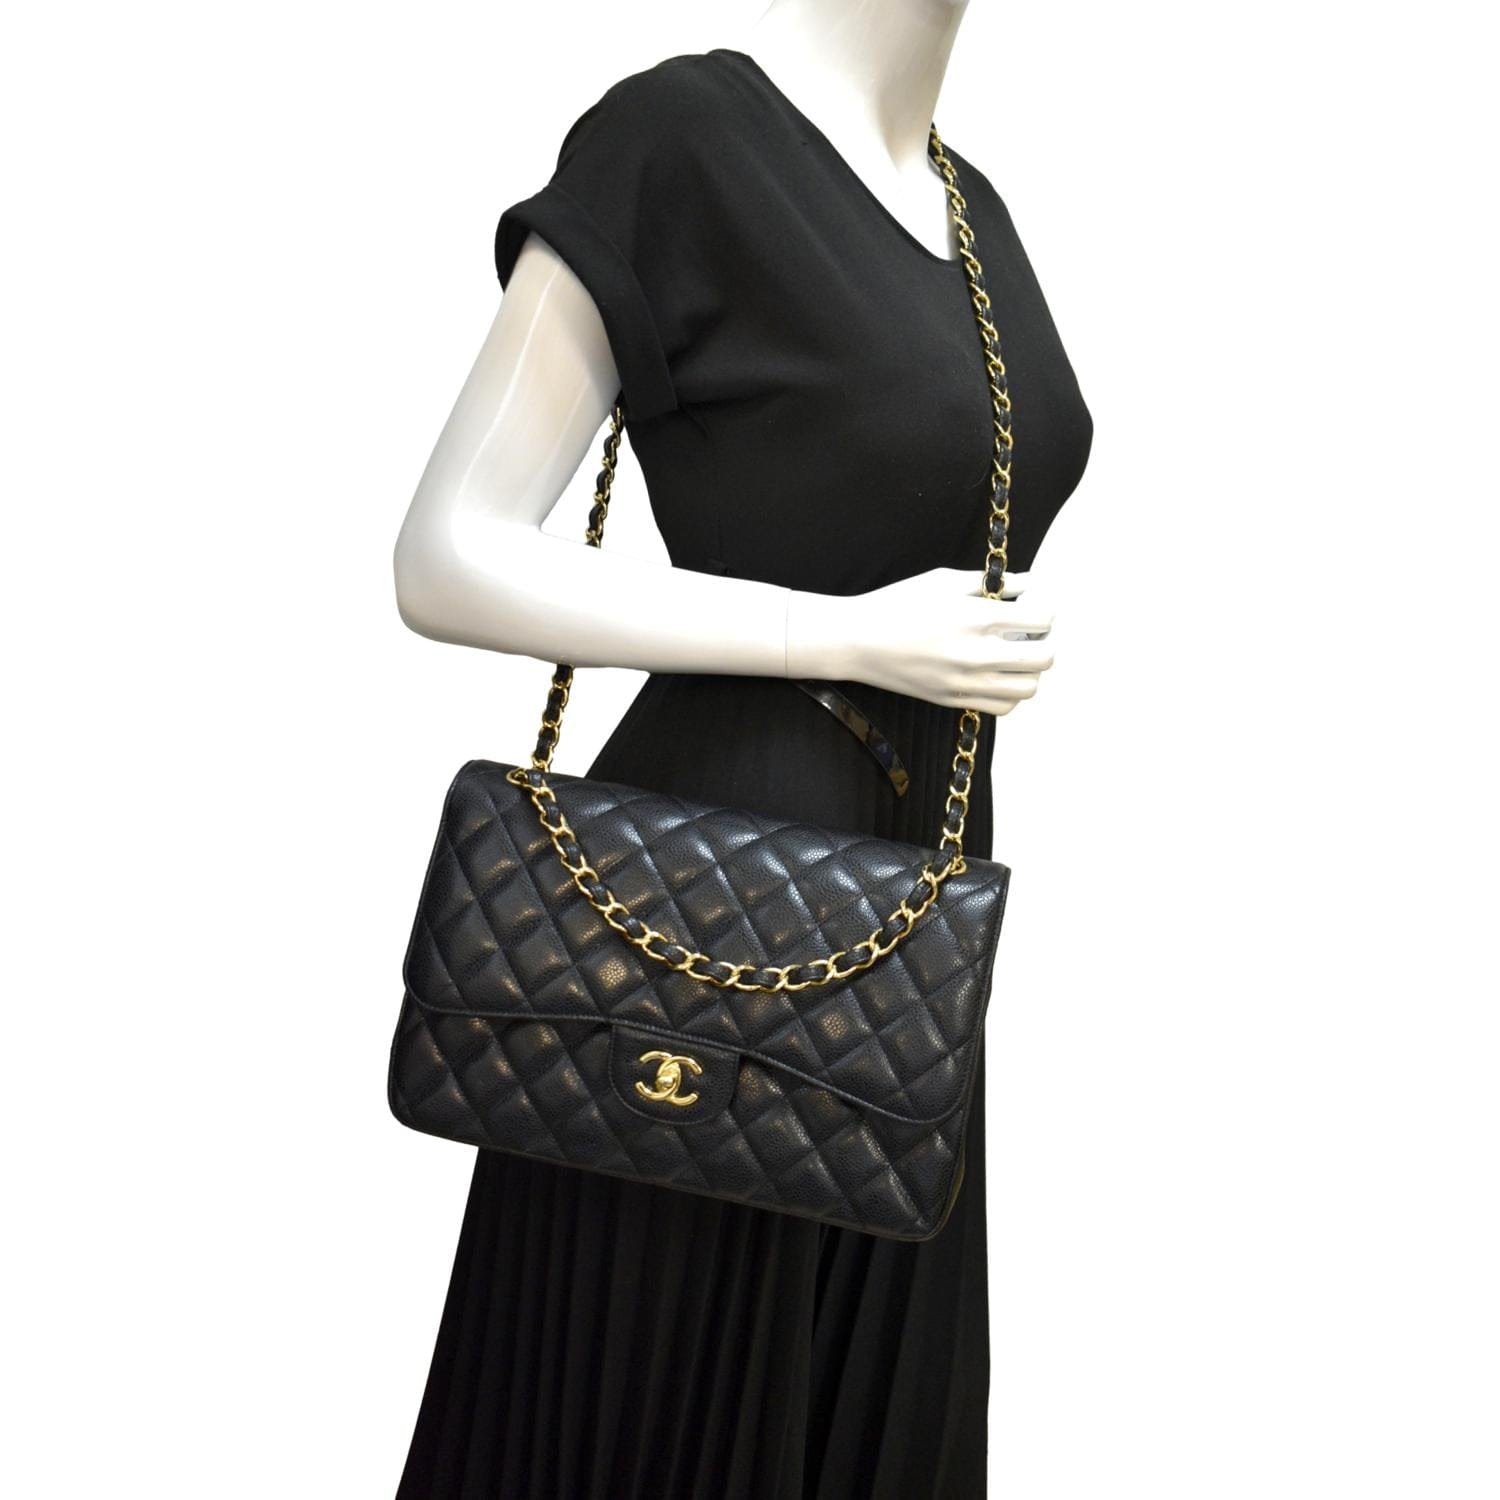 Chanel Classic Jumbo Double Flap Leather Shoulder Bag